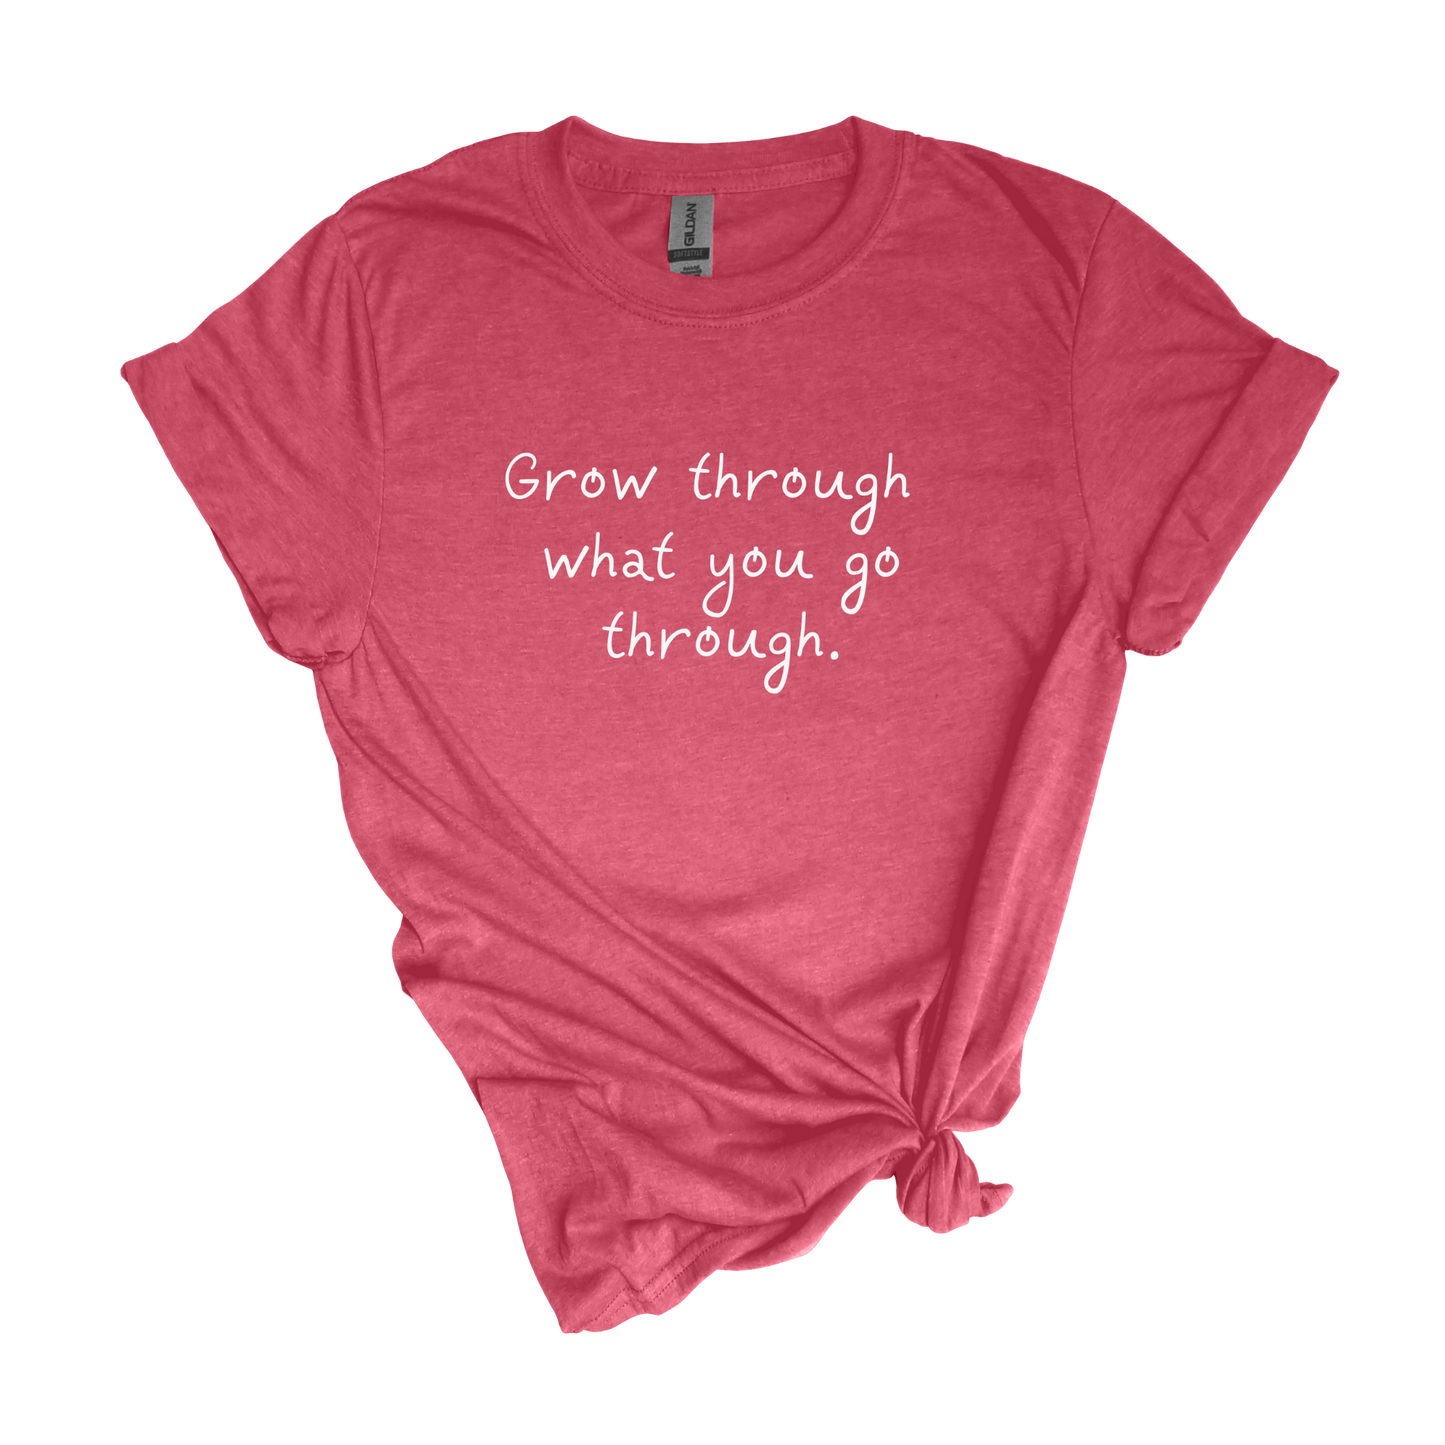 Grow through what you go through - Adult Unisex Soft Inspirational T-shirt